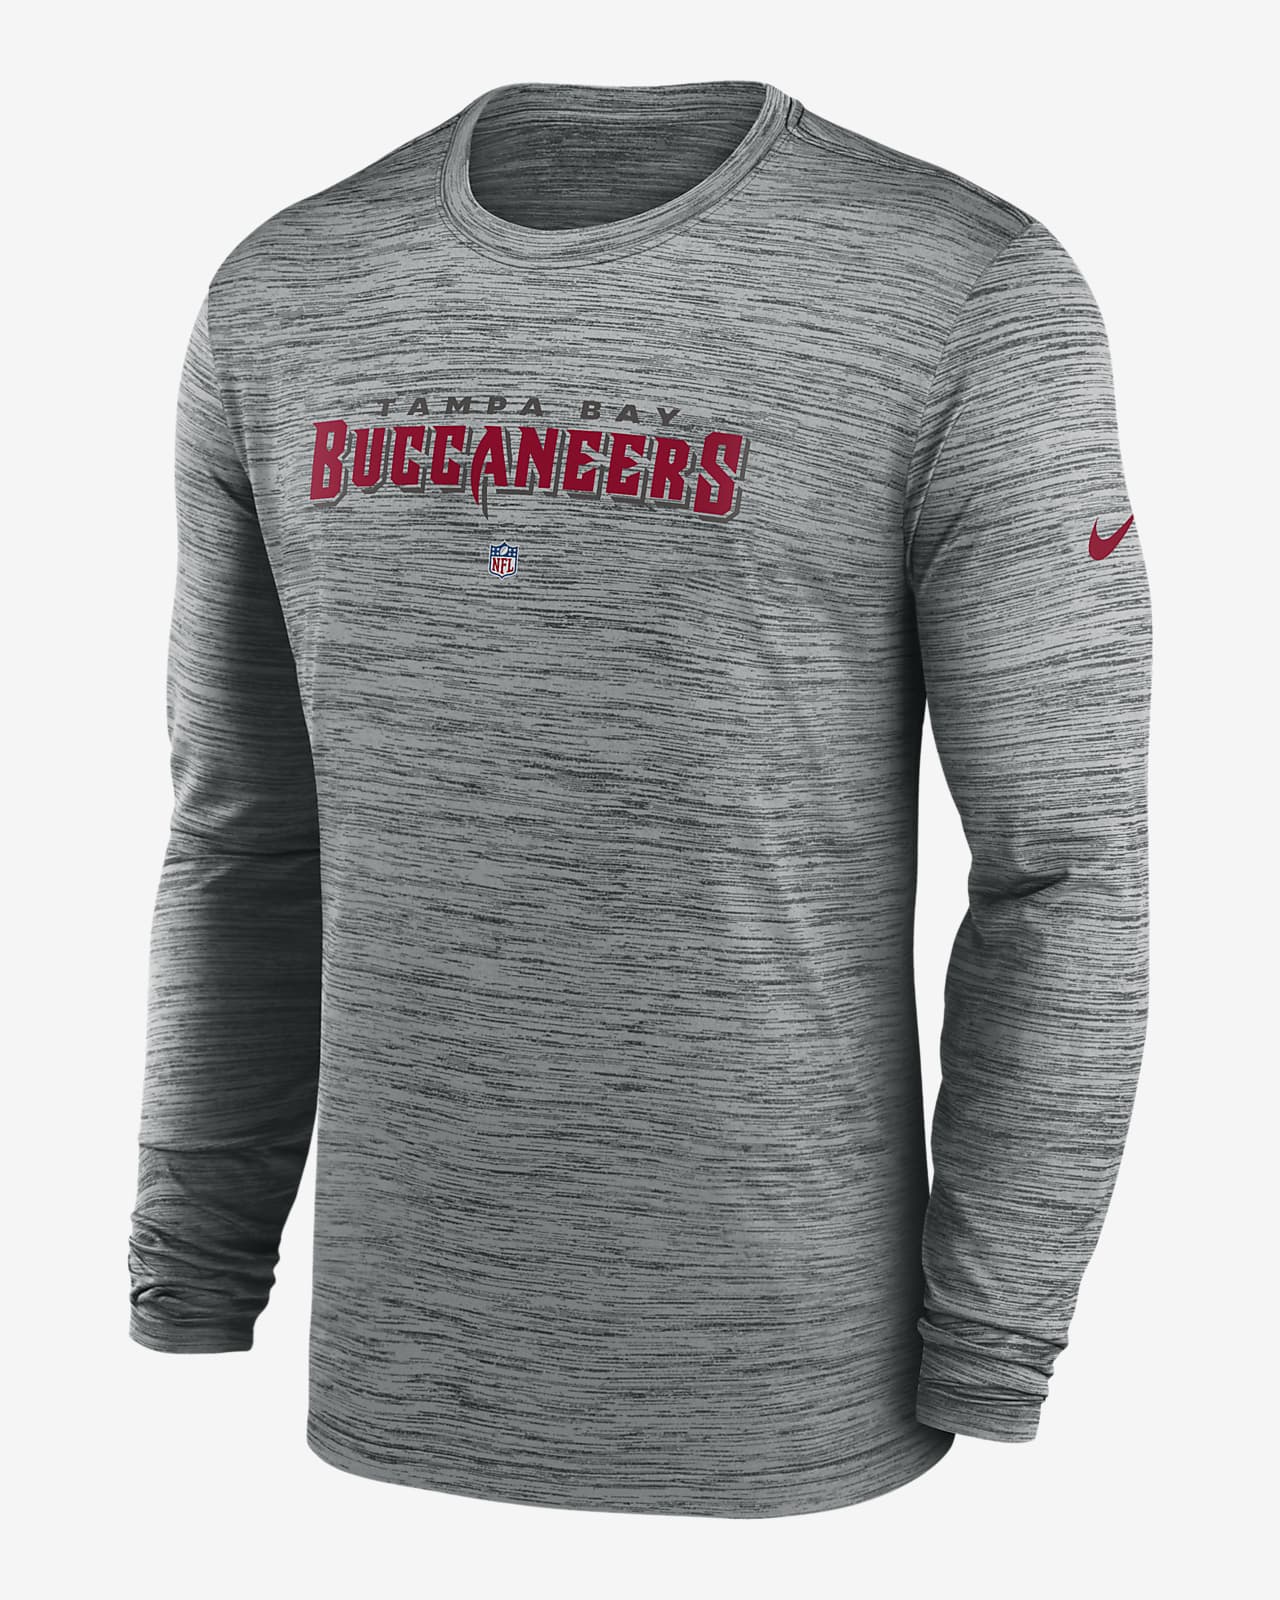 buccaneers dri fit shirt